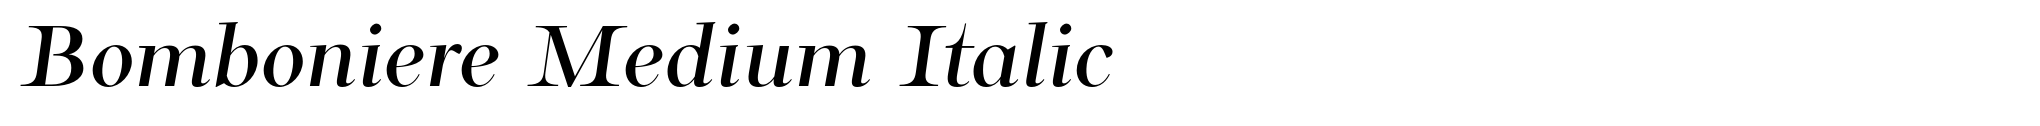 Bomboniere Medium Italic image